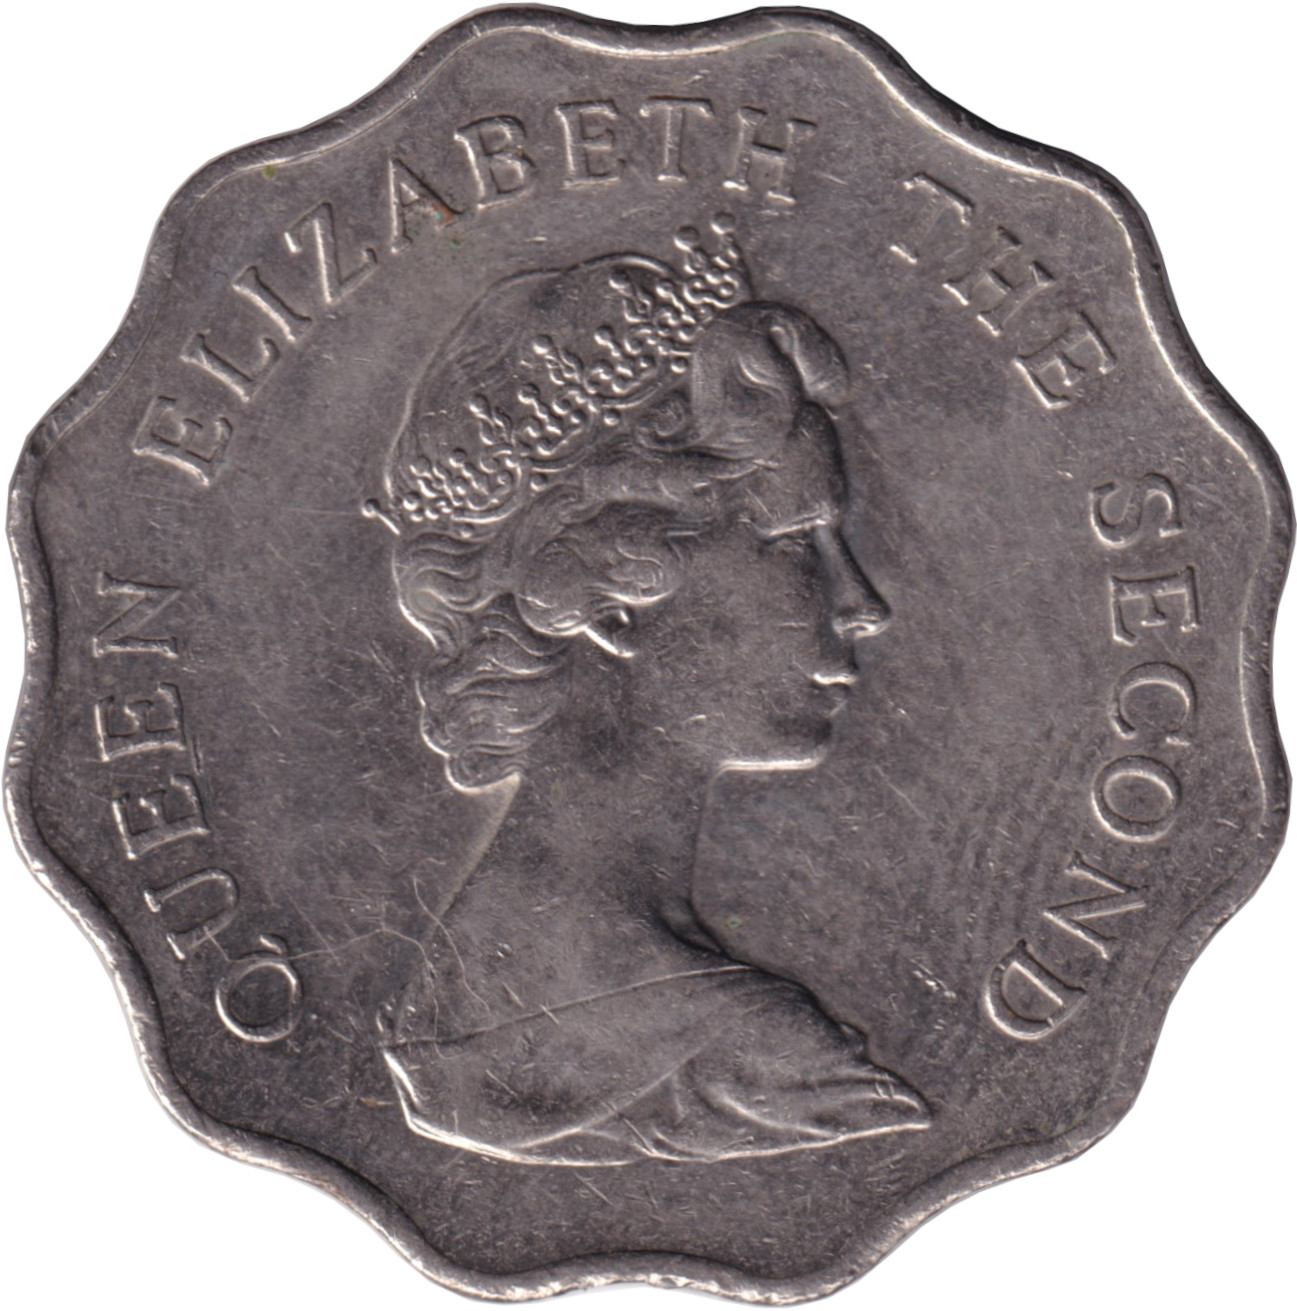 2 dollars - Elizabeth II - Mature bust